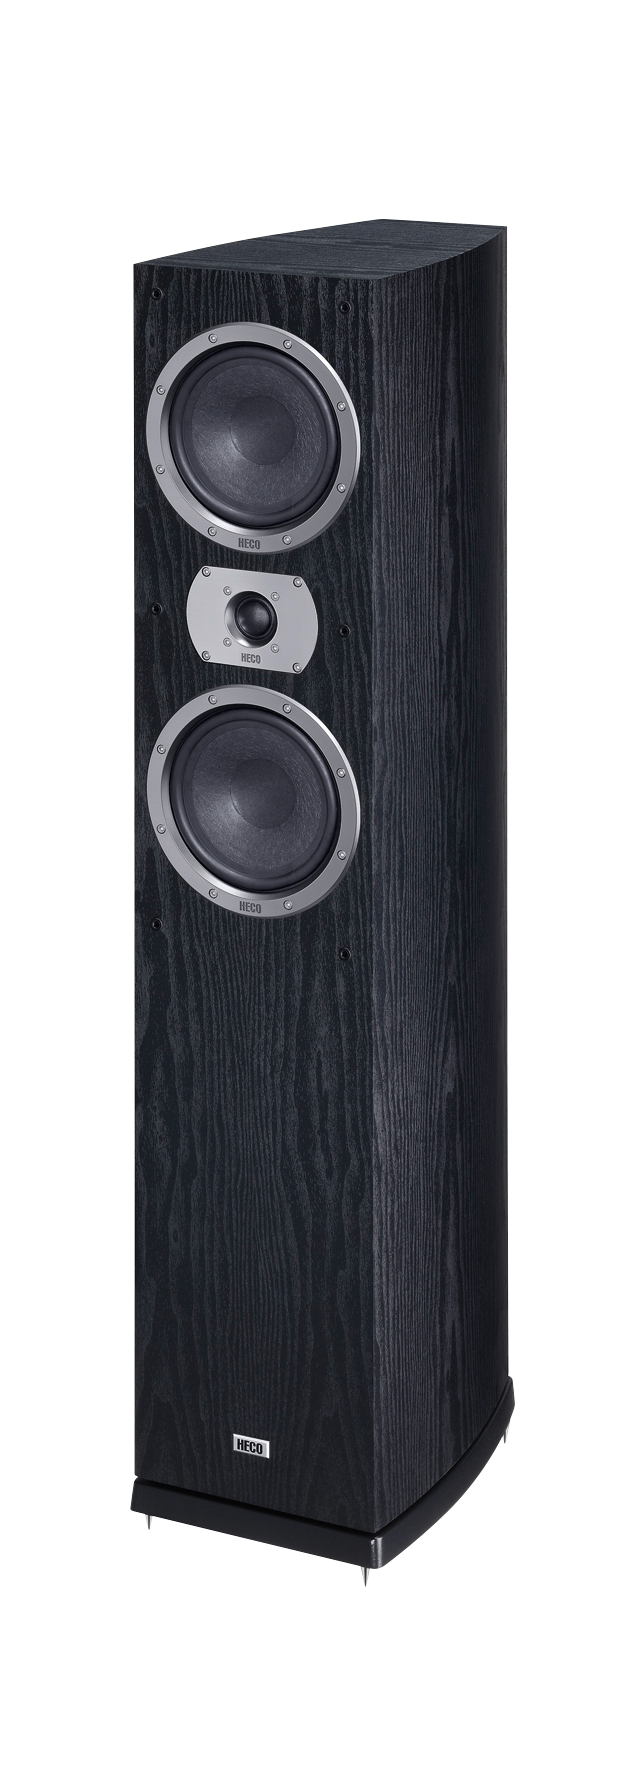 Victa Prime 502, 2 1/2-way floorstanding speaker, bass reflex configuration